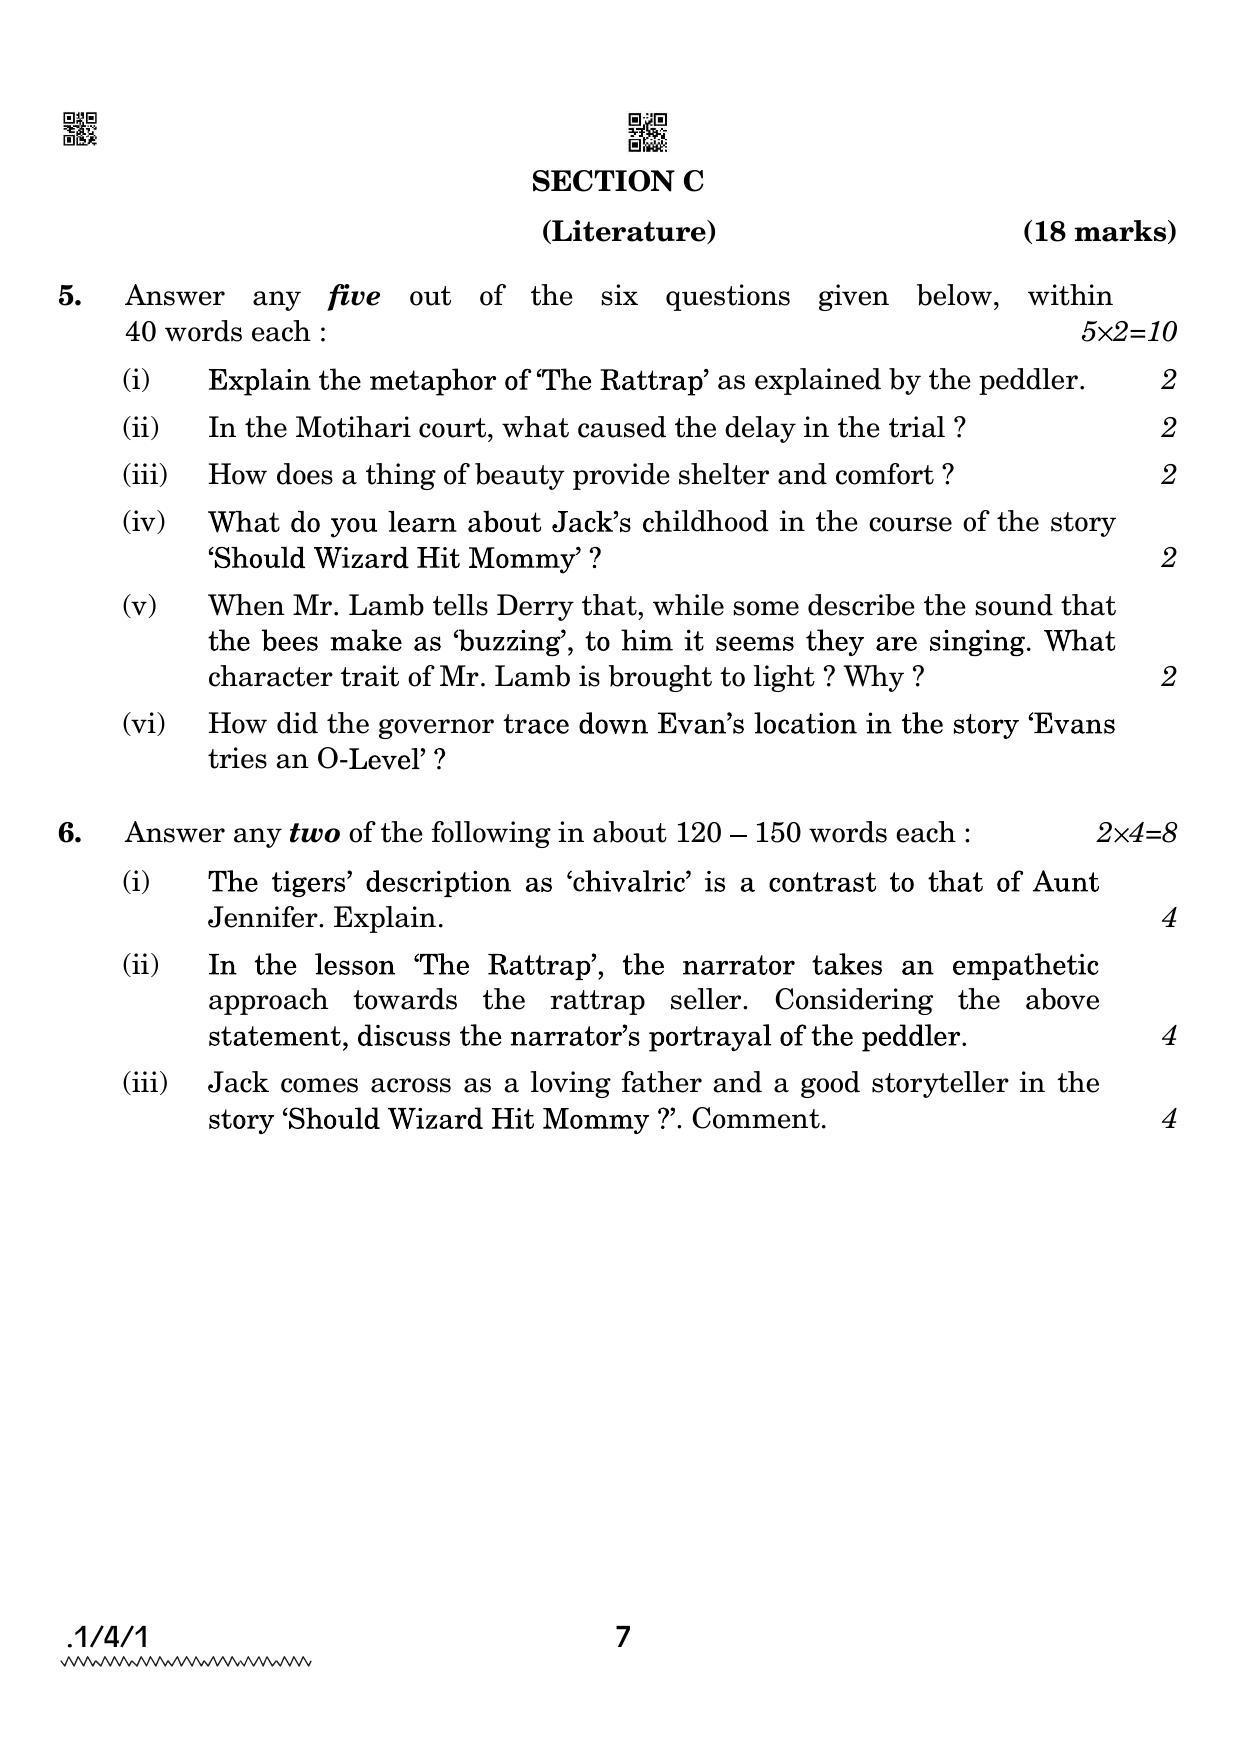 CBSE Class 12 1-4-1 English Core 2022 Question Paper - Page 7